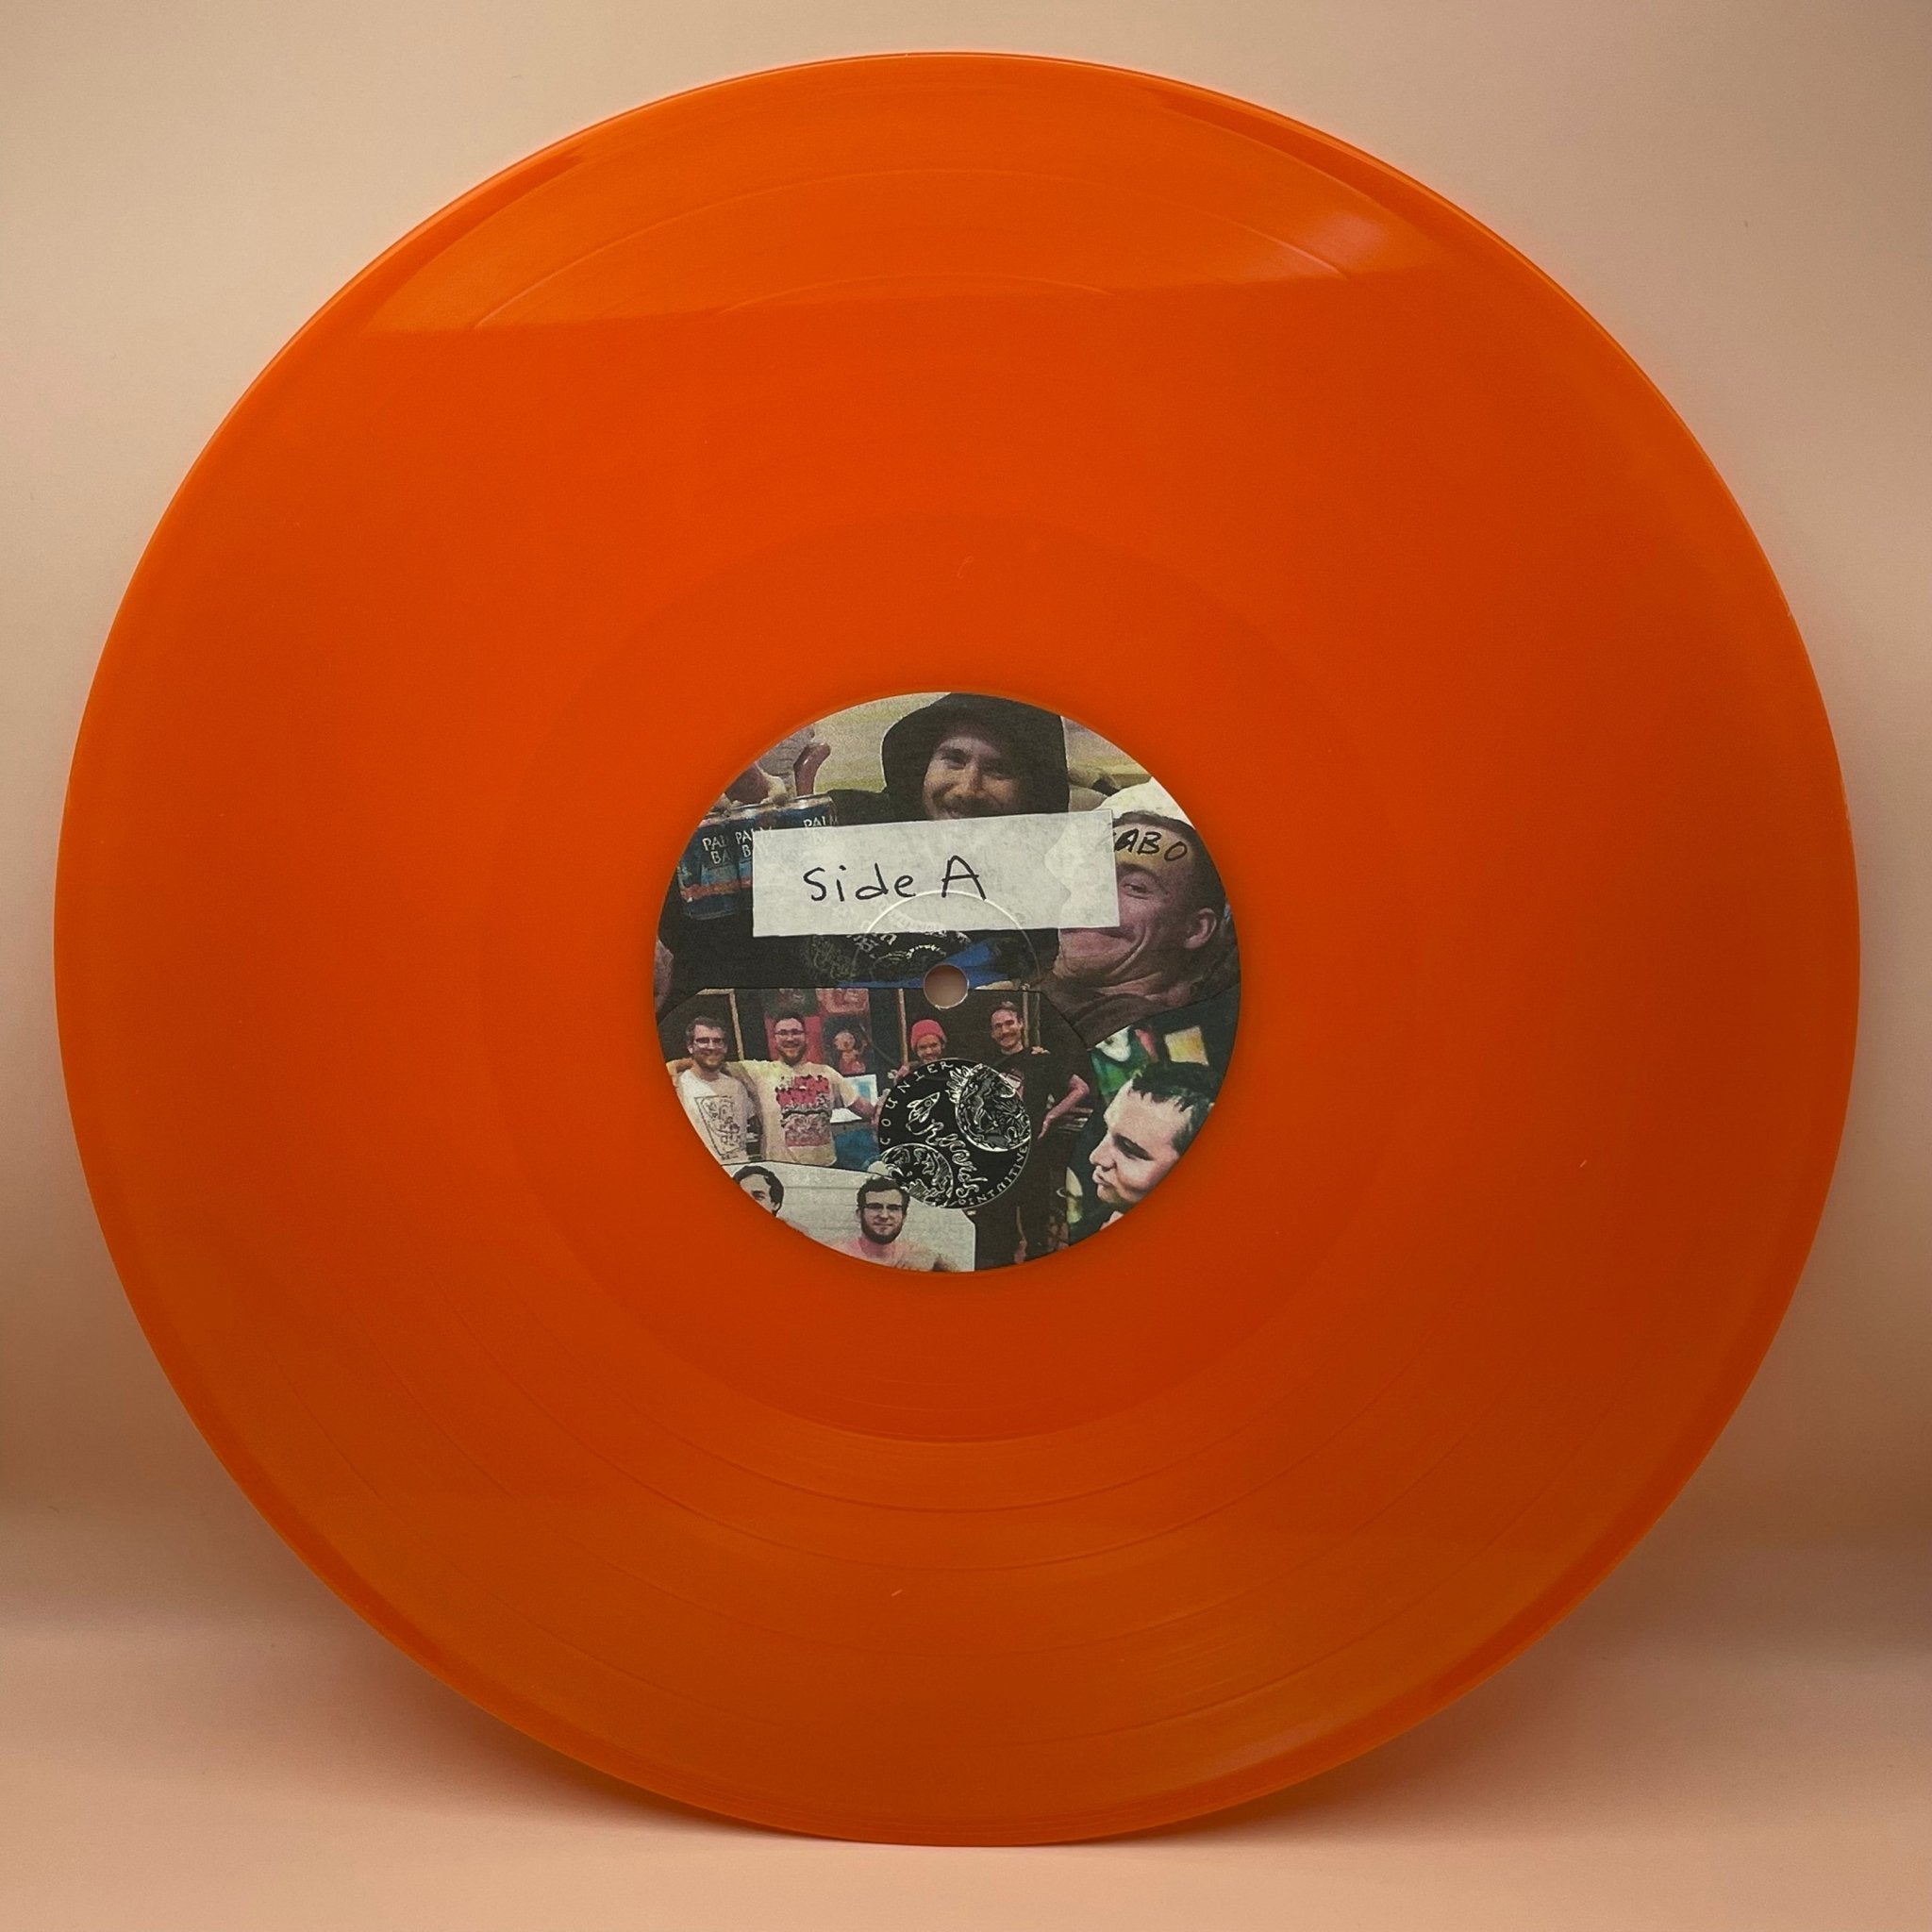 Mom Jeans: Puppy Love: Orange Vinyl - Steadfast Records